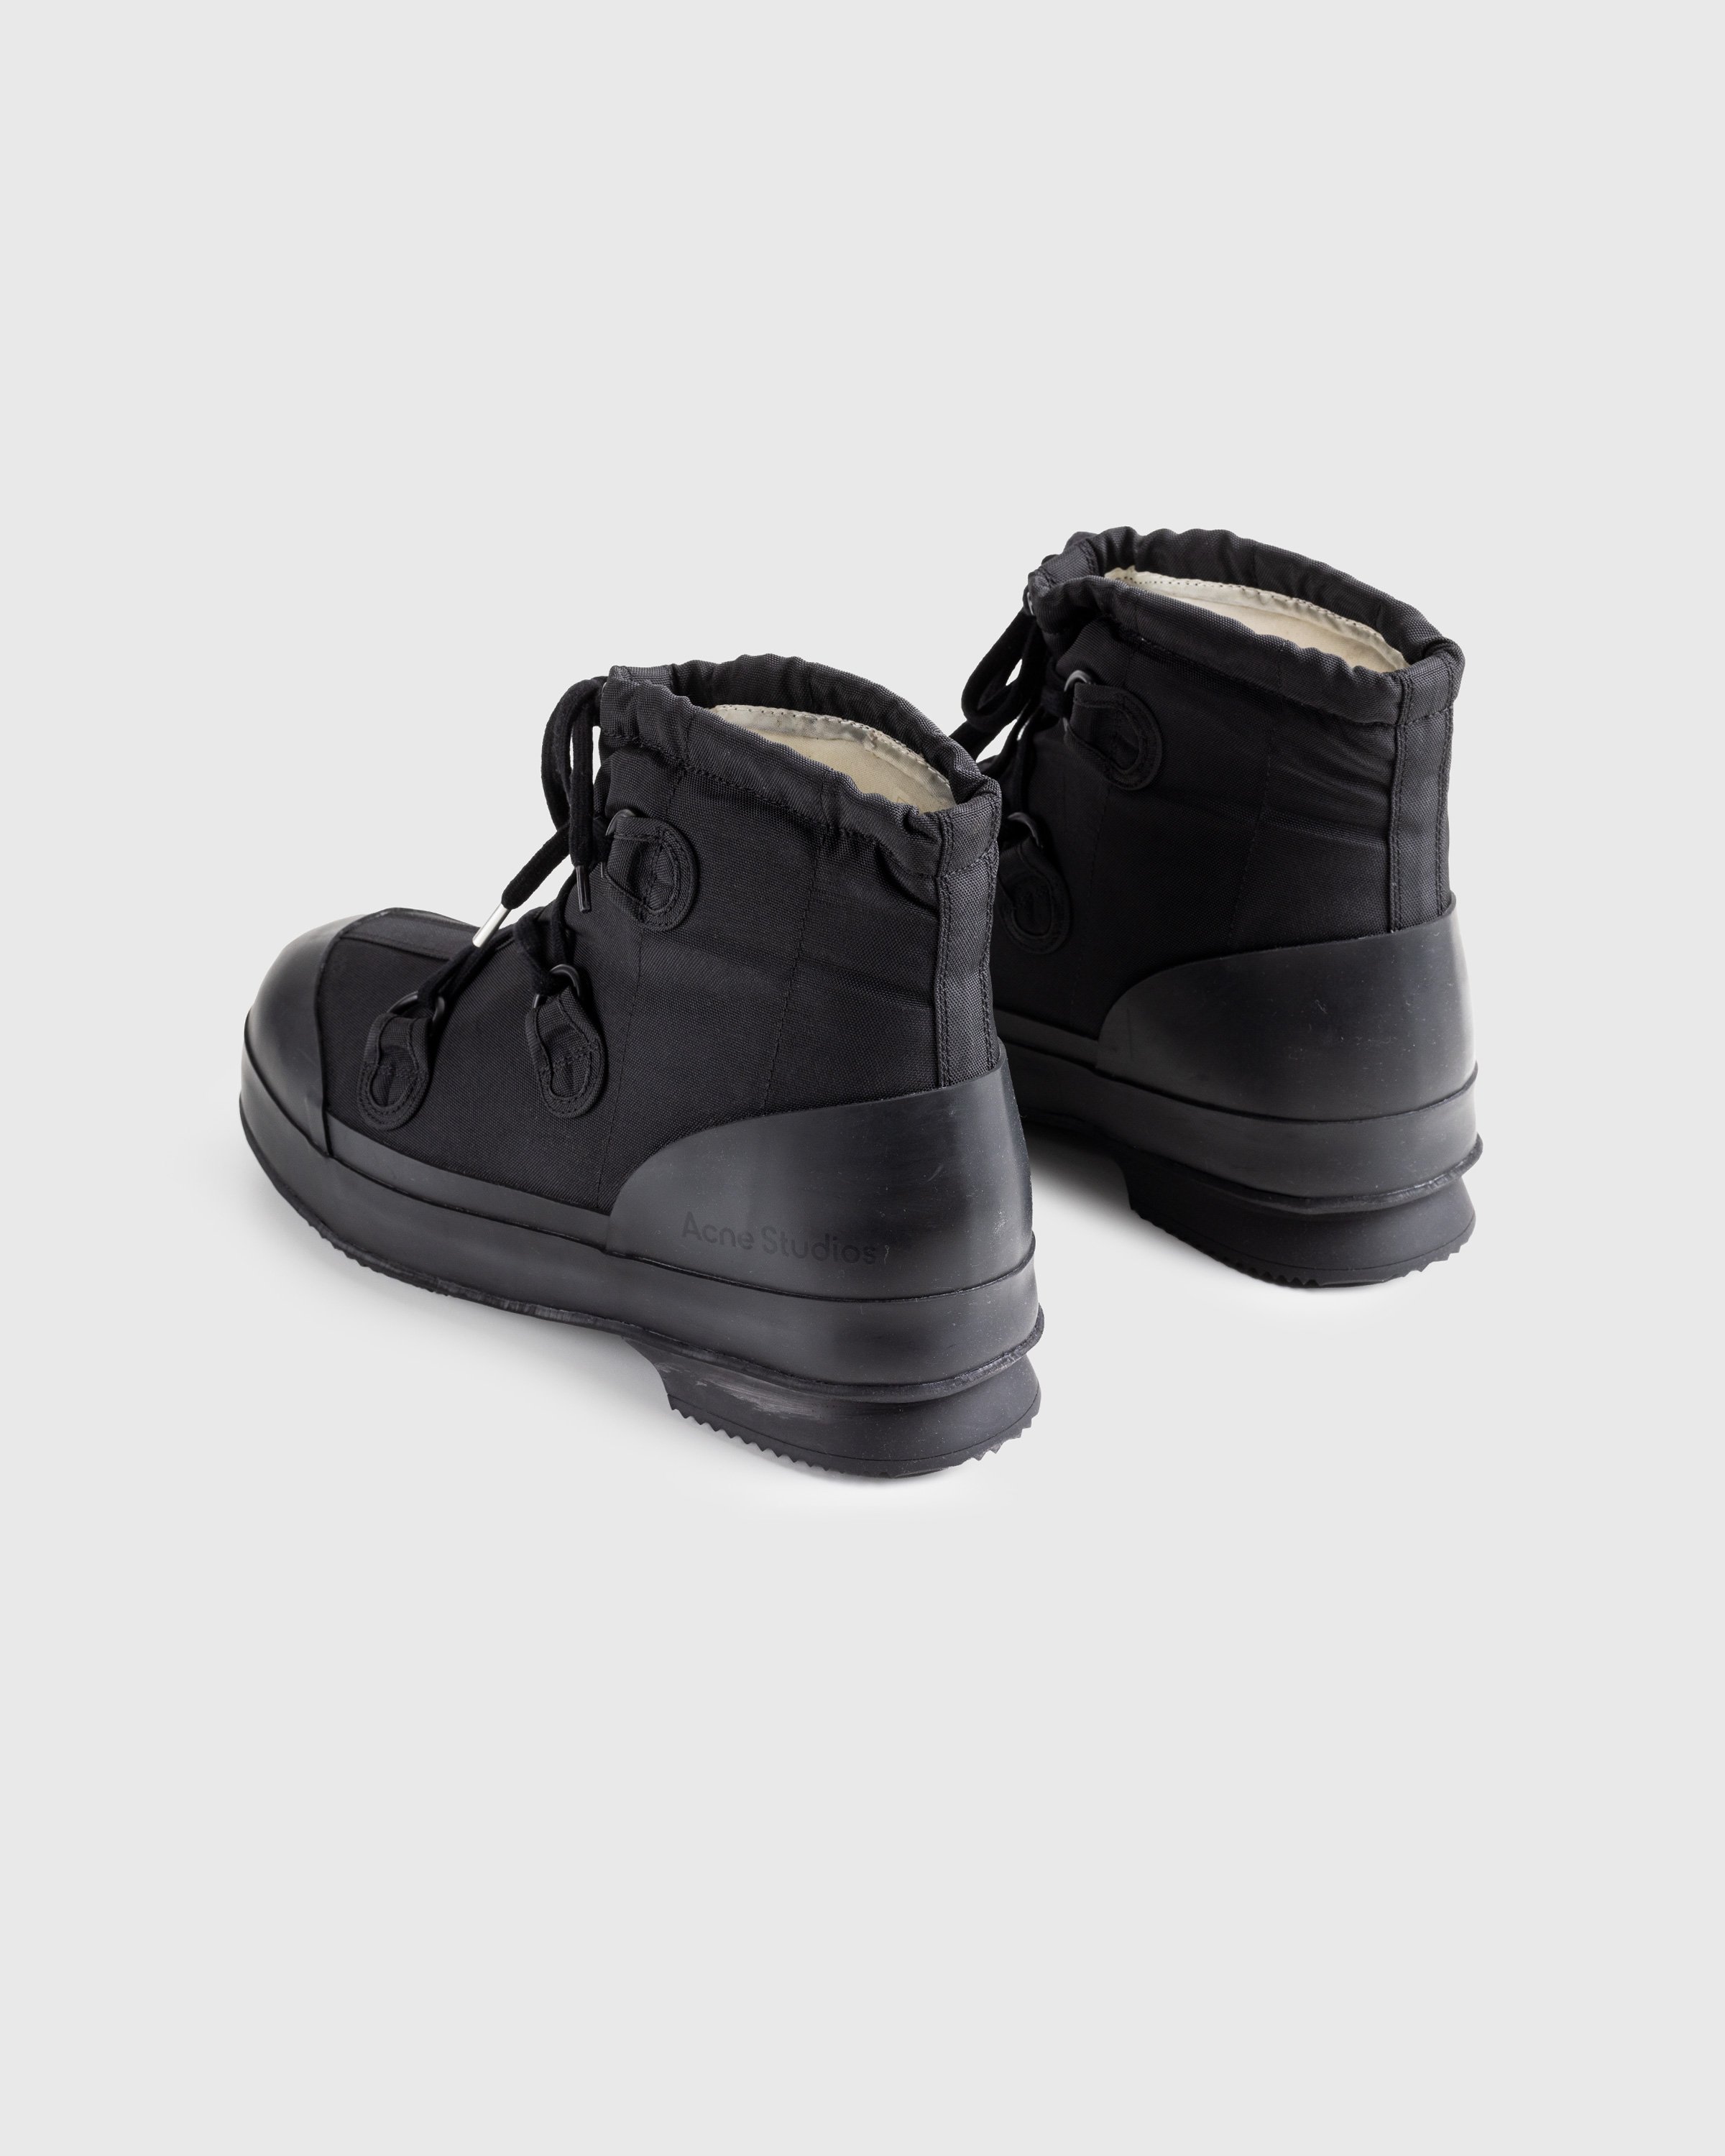 Acne Studios - Lace-Up Boots Black - Footwear - Black - Image 4